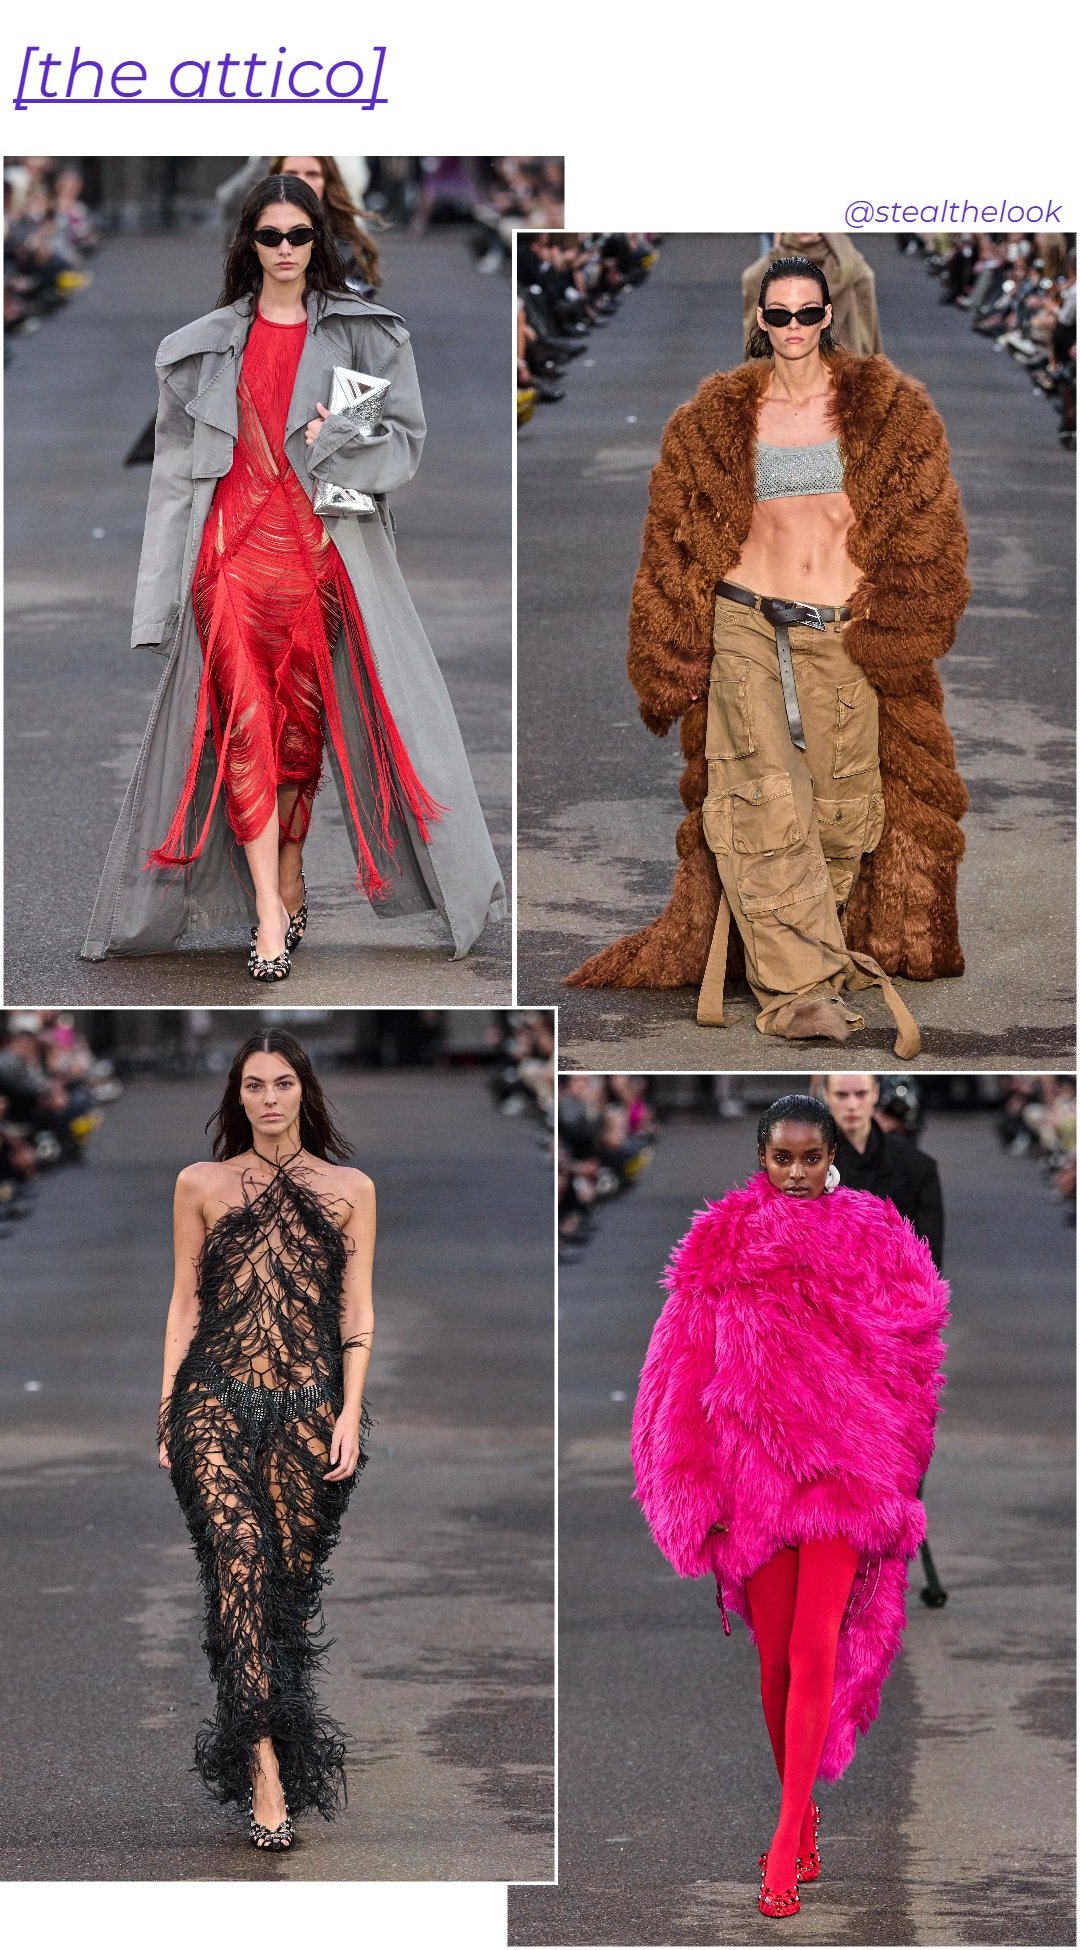 The Attico - roupas diversas - Milano Fashion Week - primavera - colagem de imagens - https://stealthelook.com.br